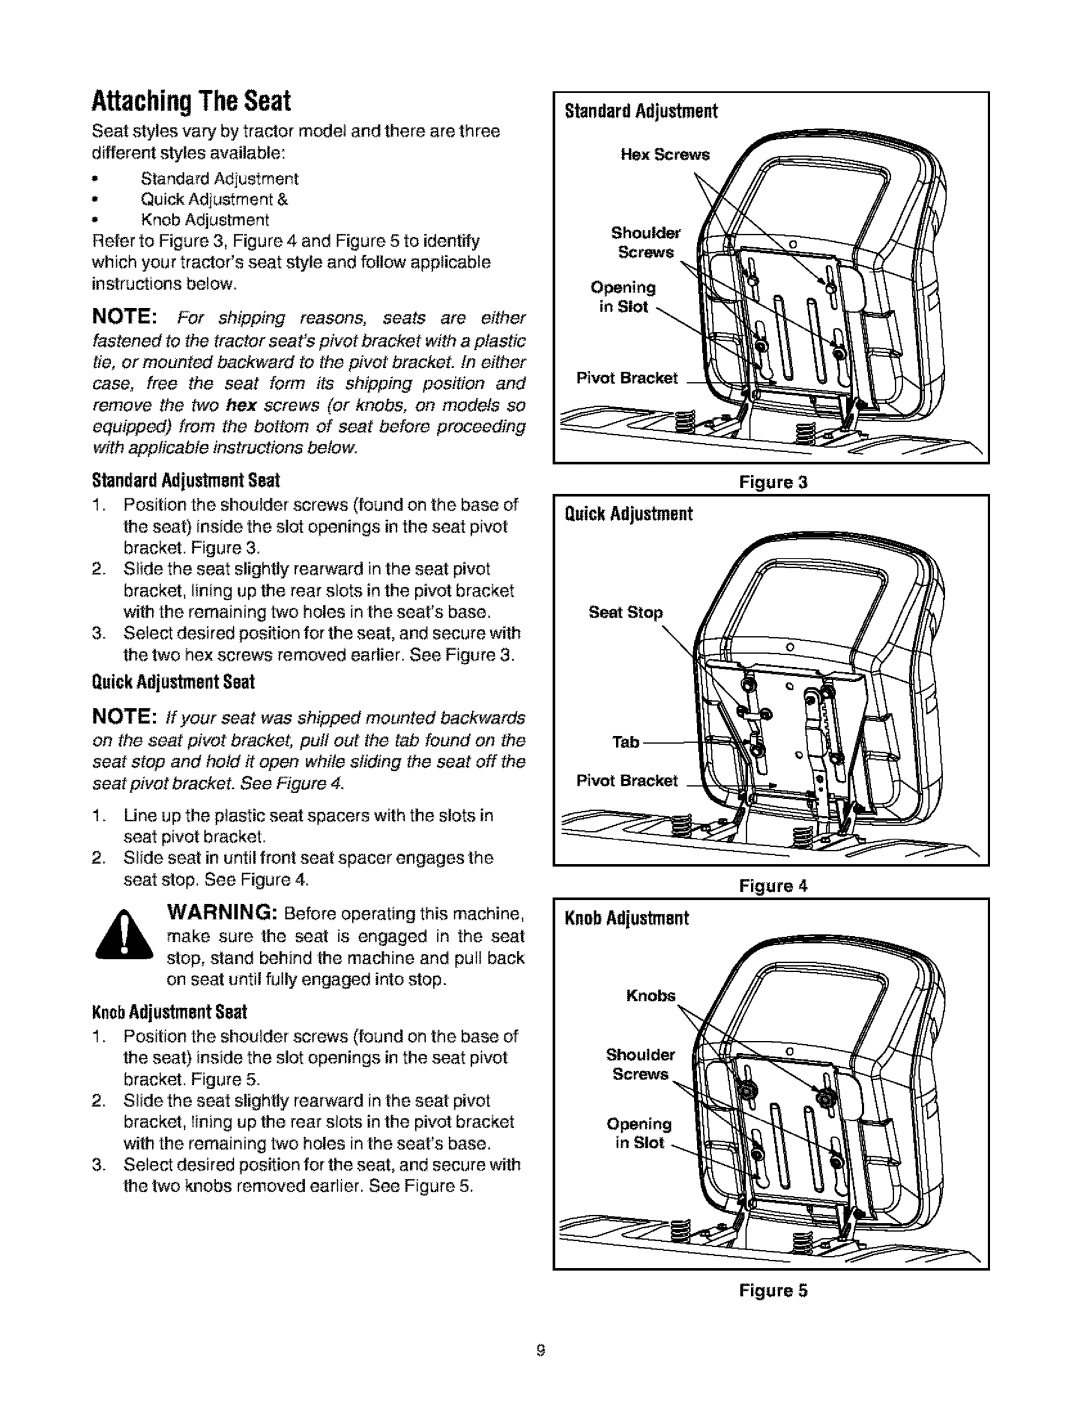 Bolens 660 manual AttachingTheSeat, StandardAdjustmentSeat, Hex Screw Shoulder, in Slot Figure Quick Adjustment, Seat Stop 